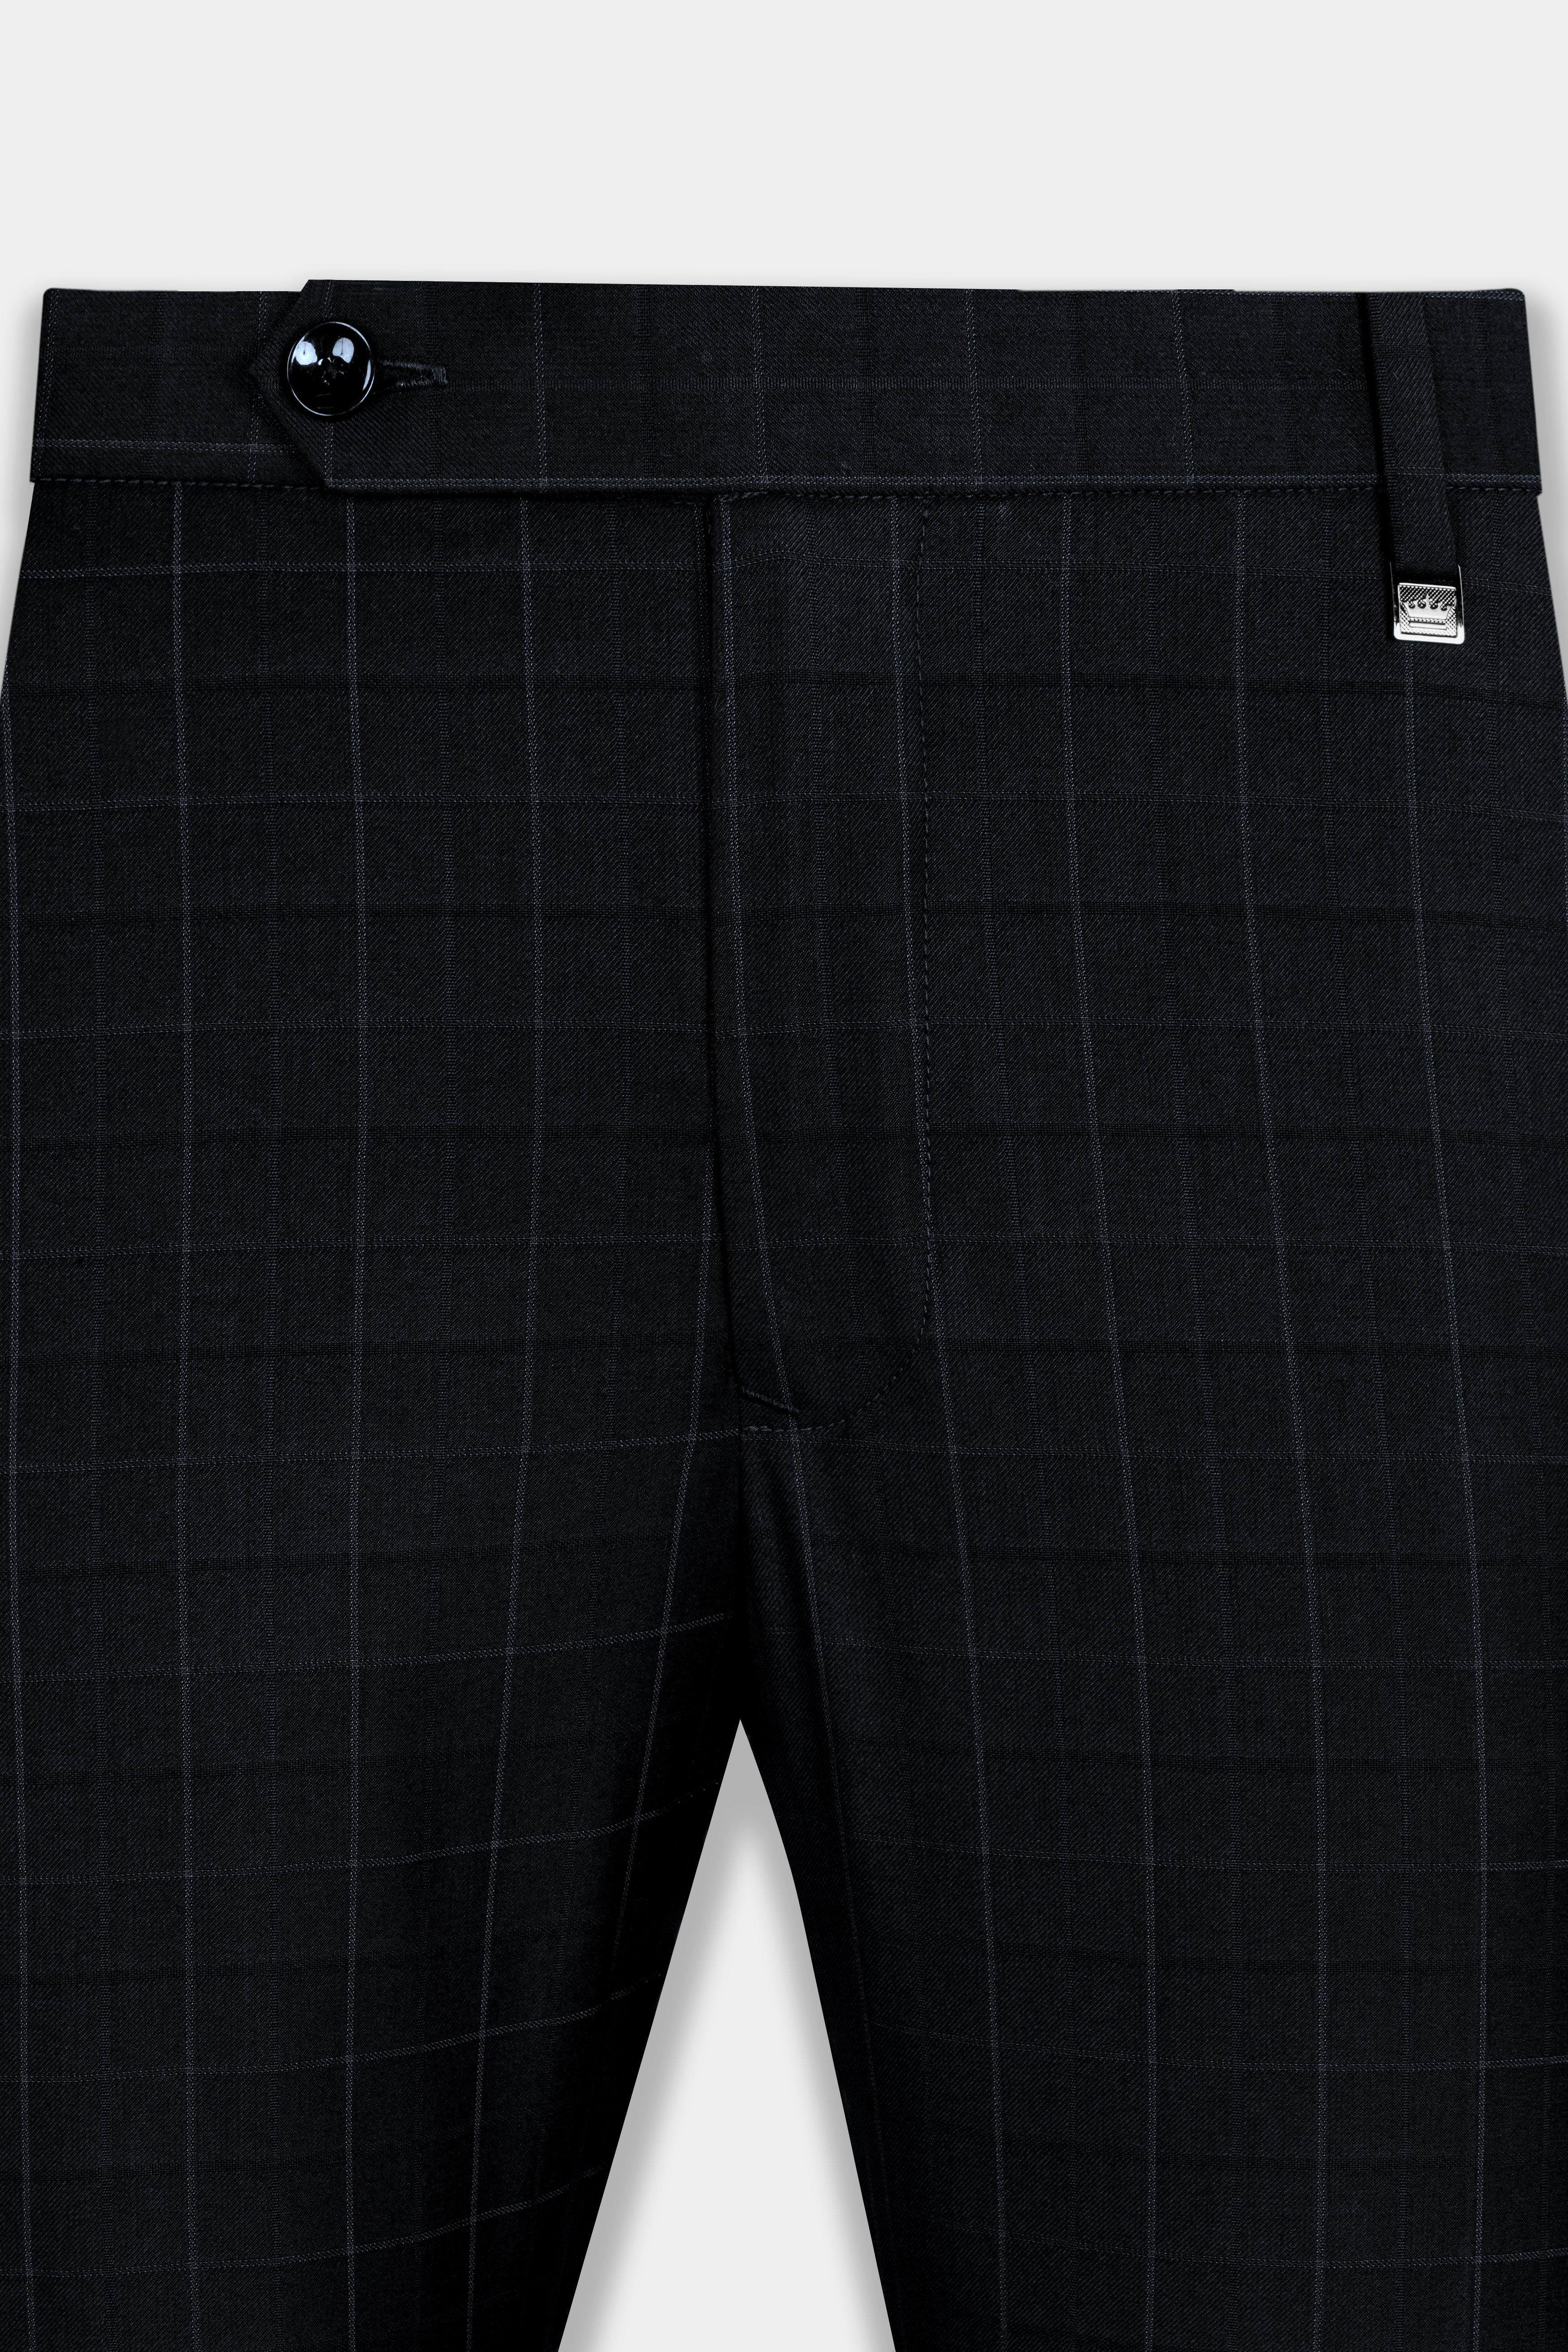 Jade Black Subtle Checkered Wool Rich Pant T2909-SW-28, T2909-SW-30, T2909-SW-32, T2909-SW-34, T2909-SW-36, T2909-SW-38, T2909-SW-40, T2909-SW-42, T2909-SW-44